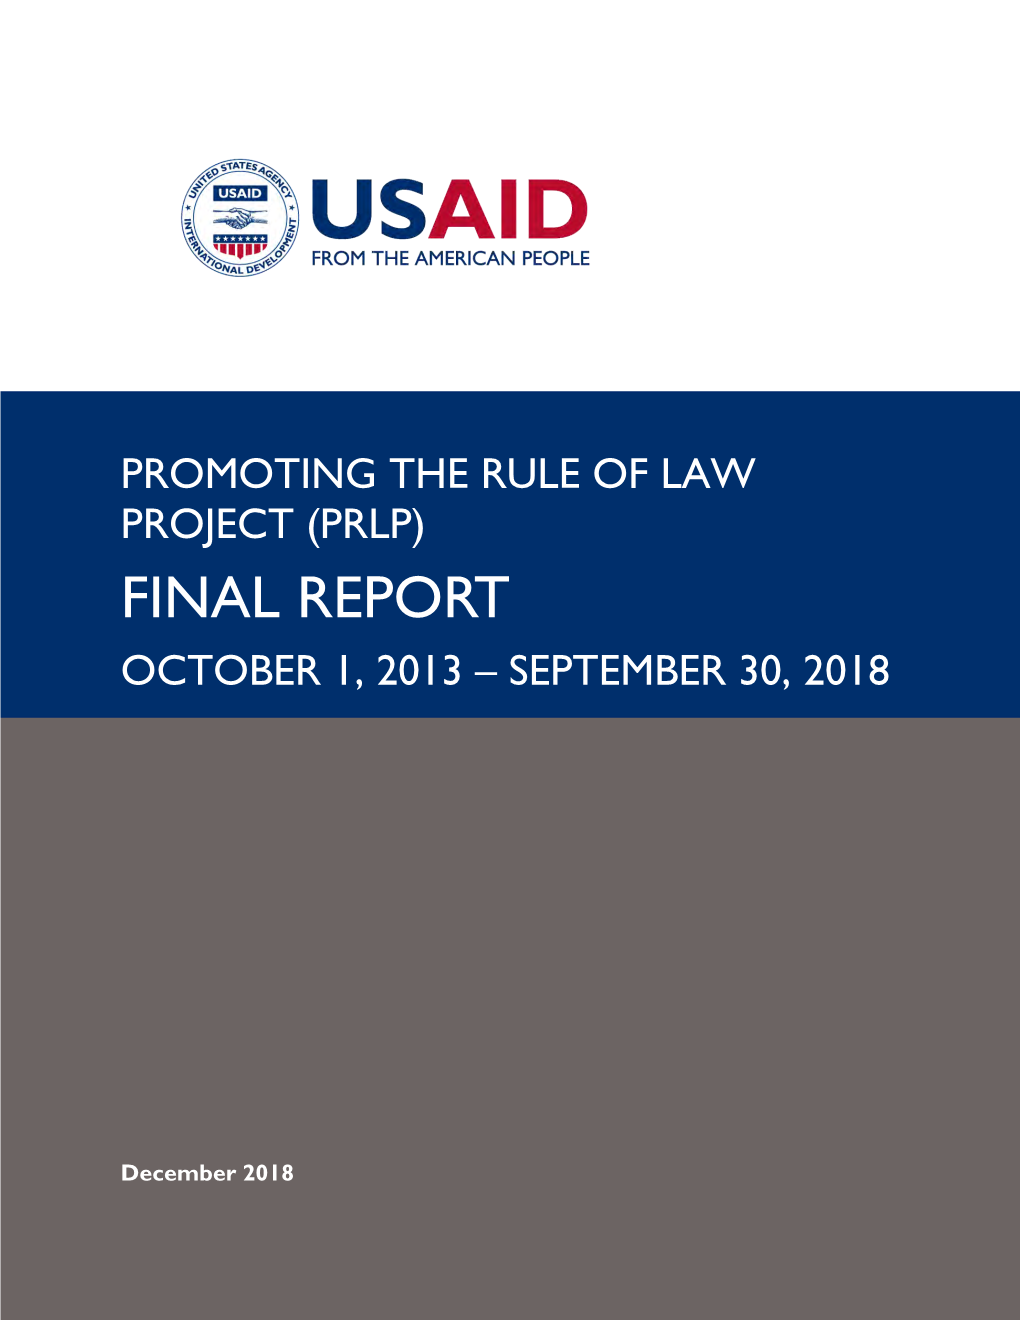 Final Report October 1, 2013 – September 30, 2018